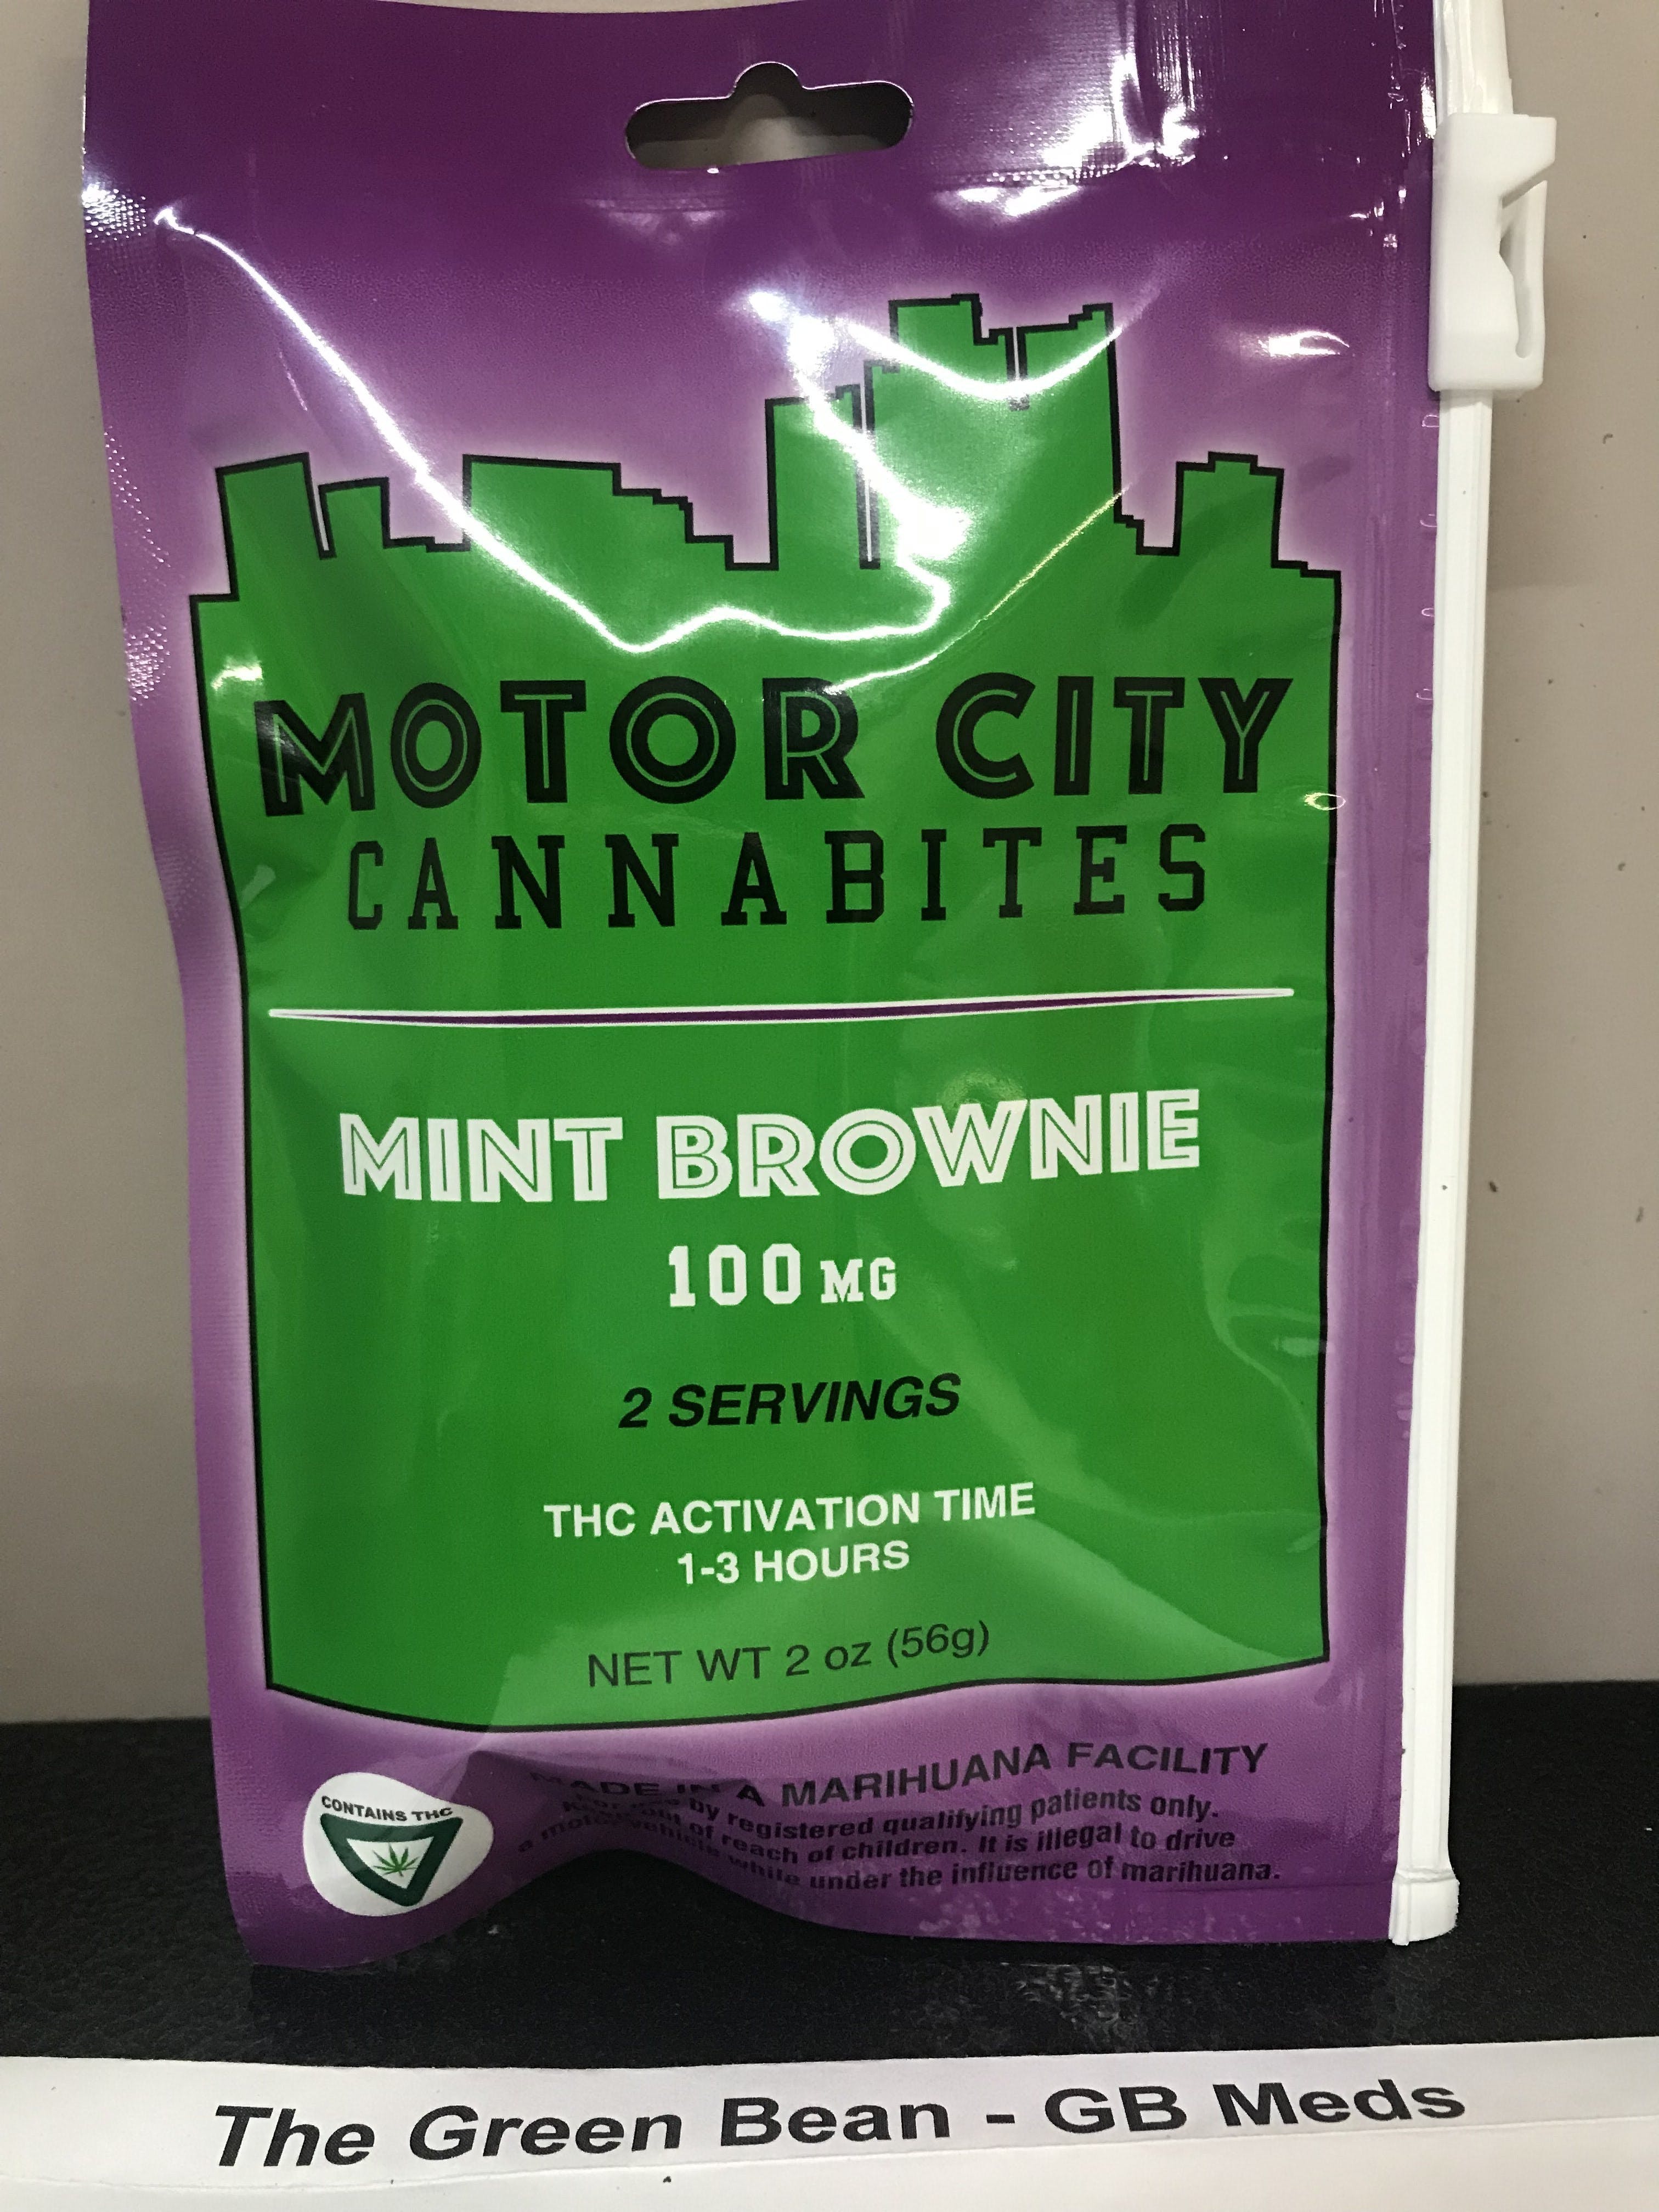 Motor City Cannabites Mint Brownie